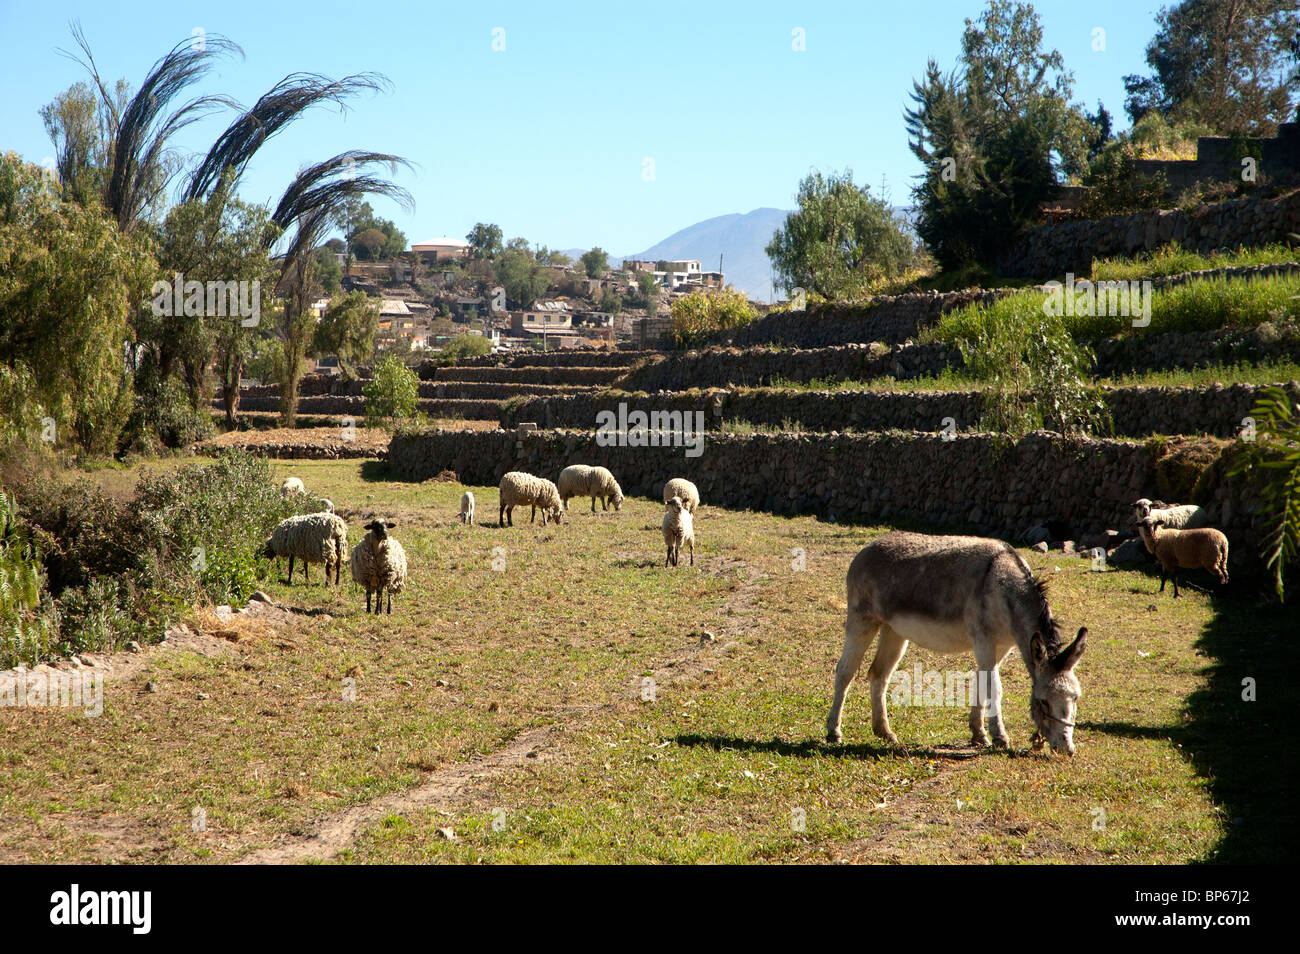 Rural scene with sheep and donkey, near Araquipa, Peru. Stock Photo